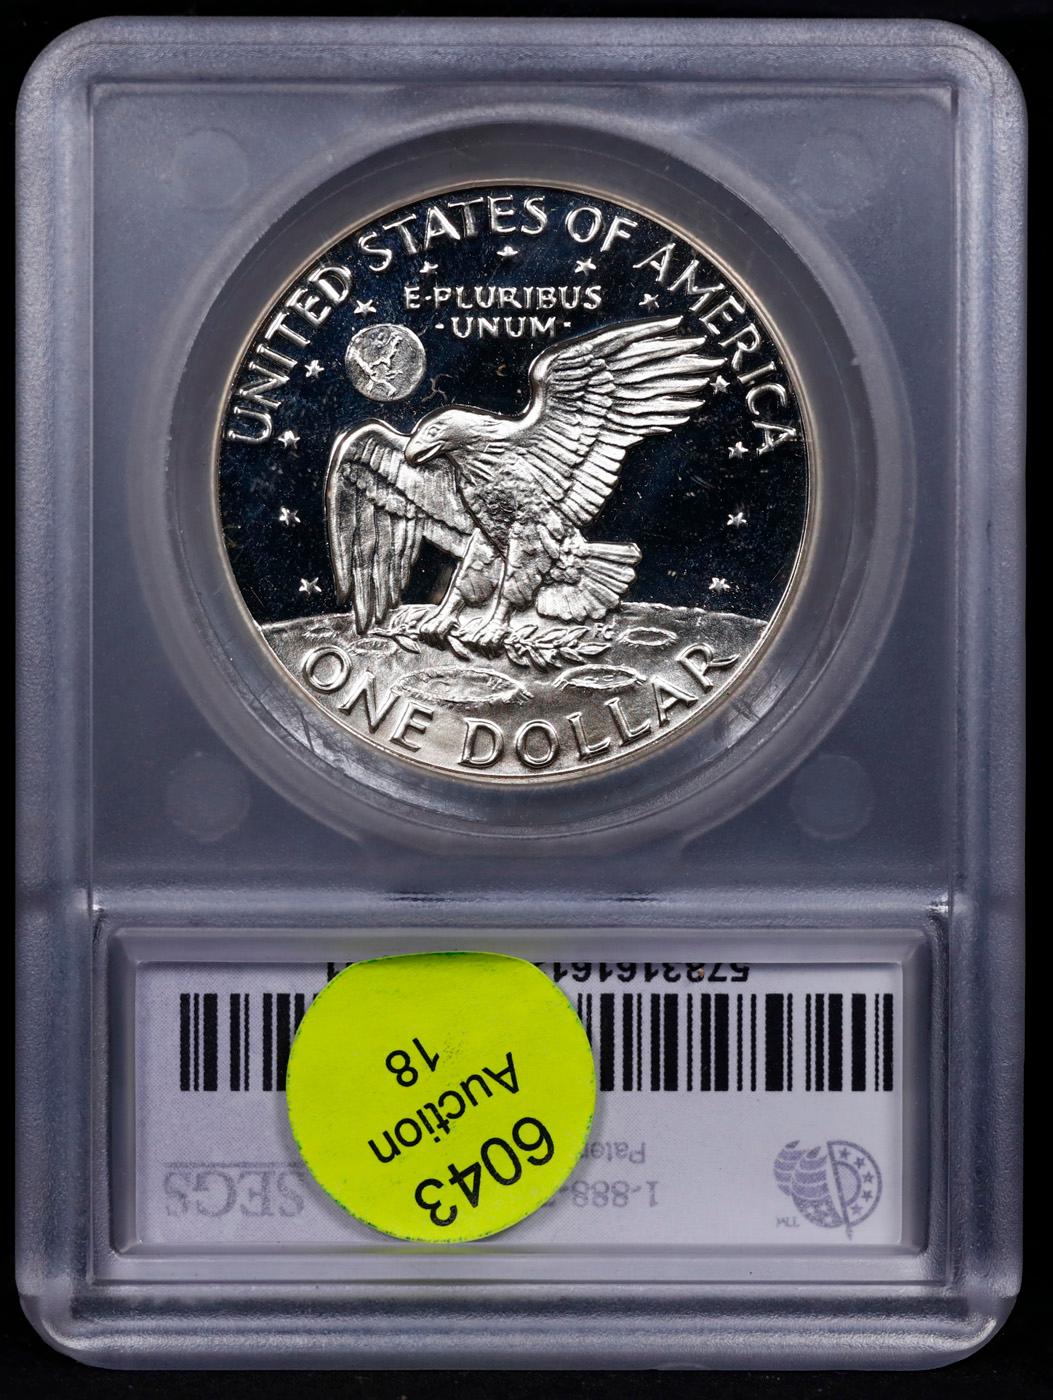 Proof 1973-s silver Eisenhower Dollar $1 Graded pr69+ dcam BY SEGS